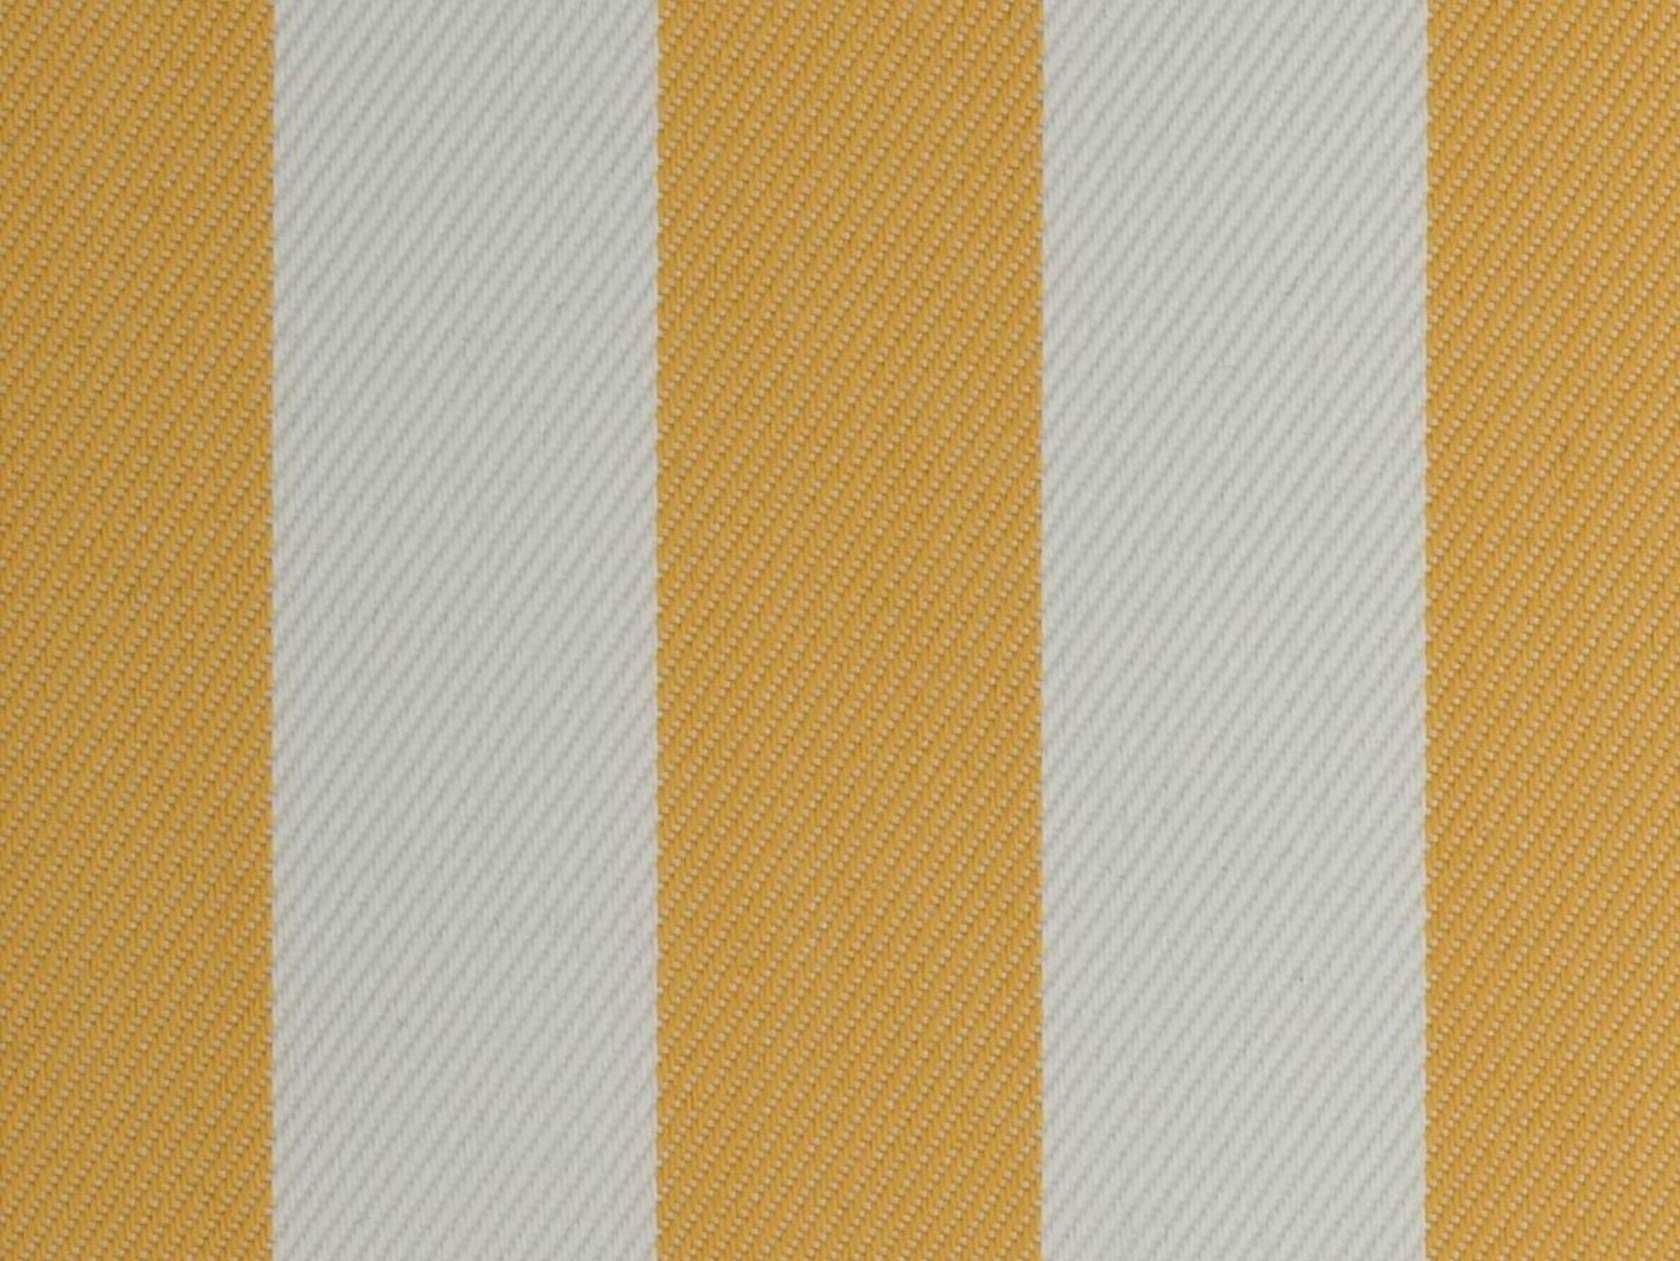 Striped polypropylene fabric